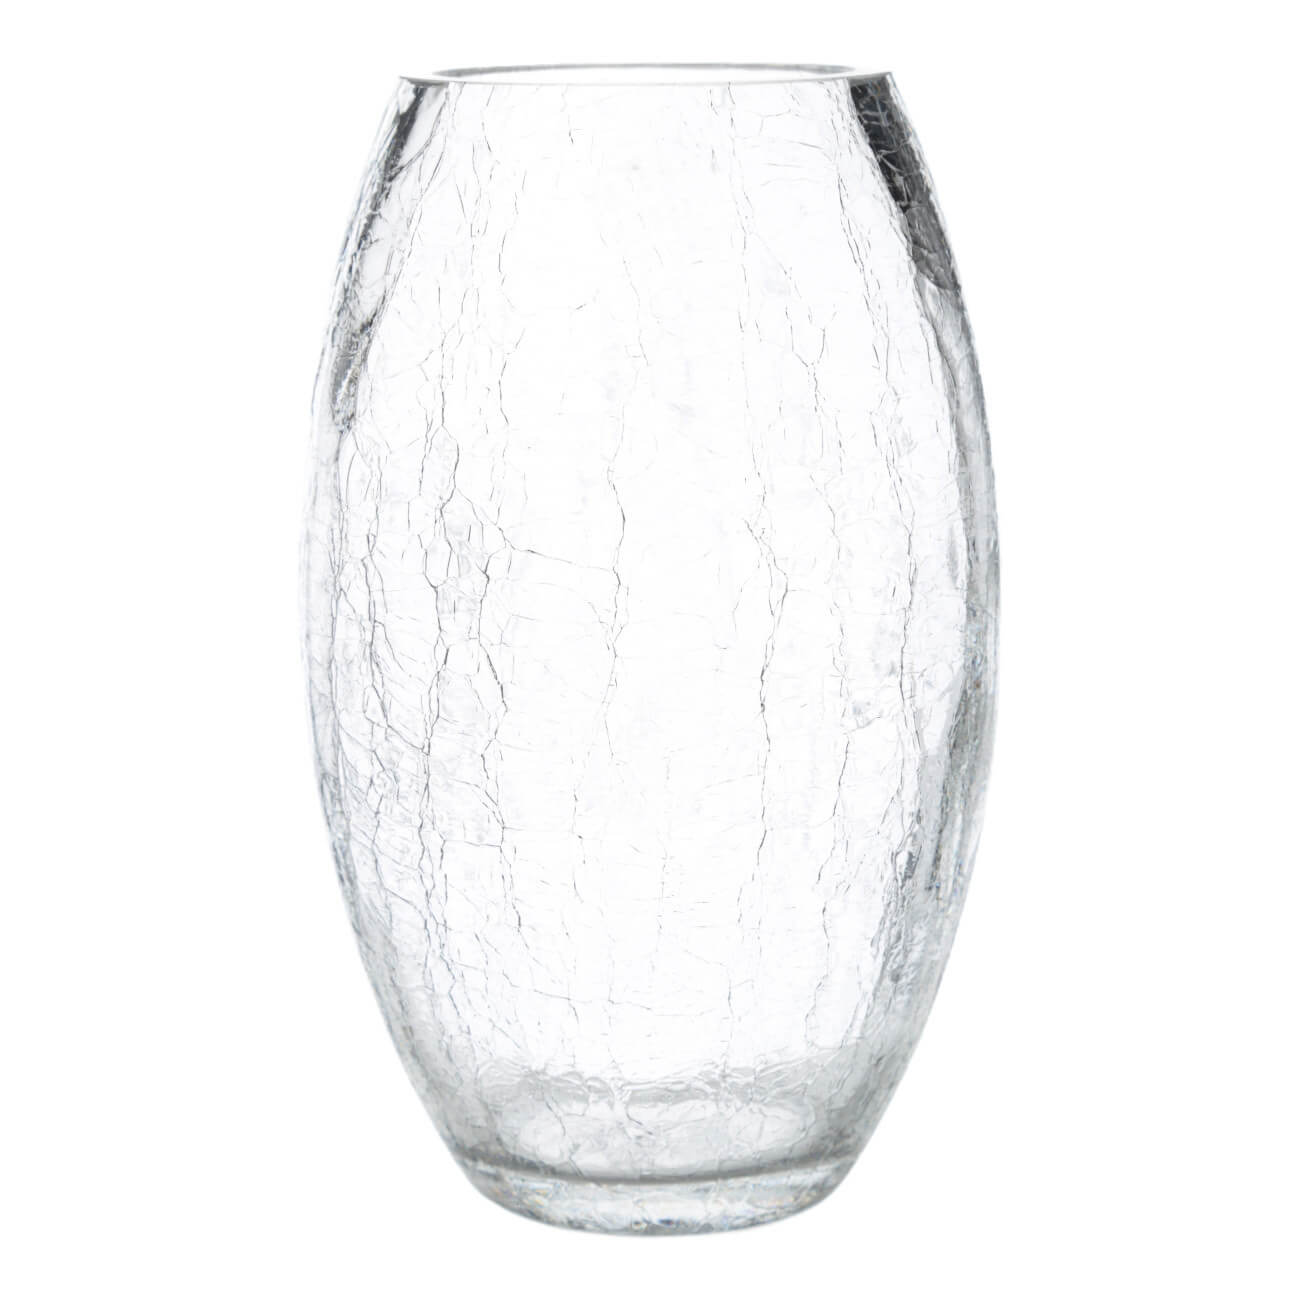 Ваза для цветов, 24 см, стекло, Кракелюр, Ice bacalar negro ваза